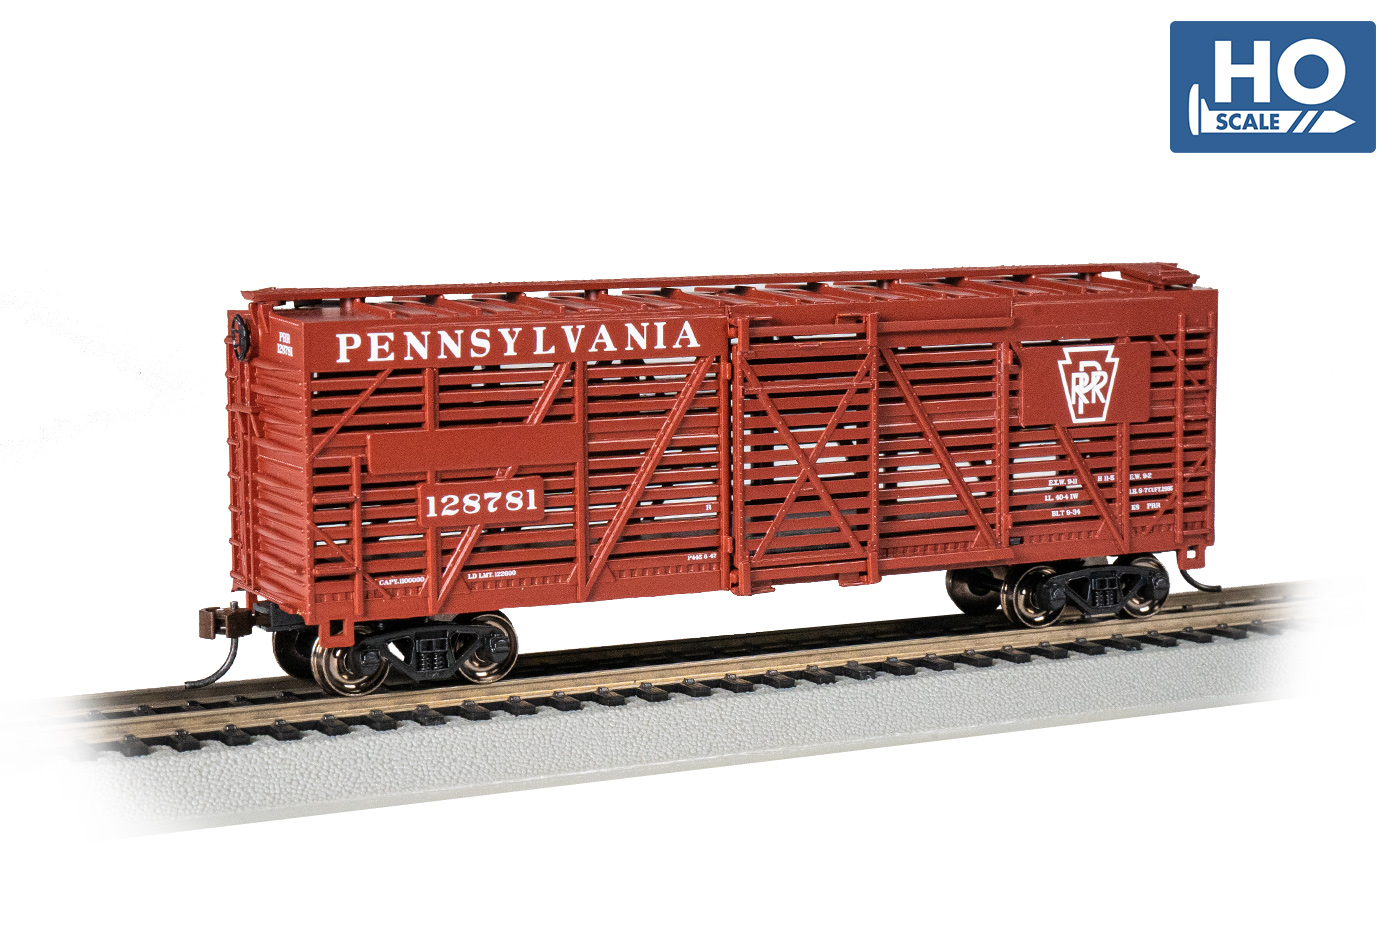 Pennsylvania Railroad #128781 - 40' Stock Car (HO Scale)